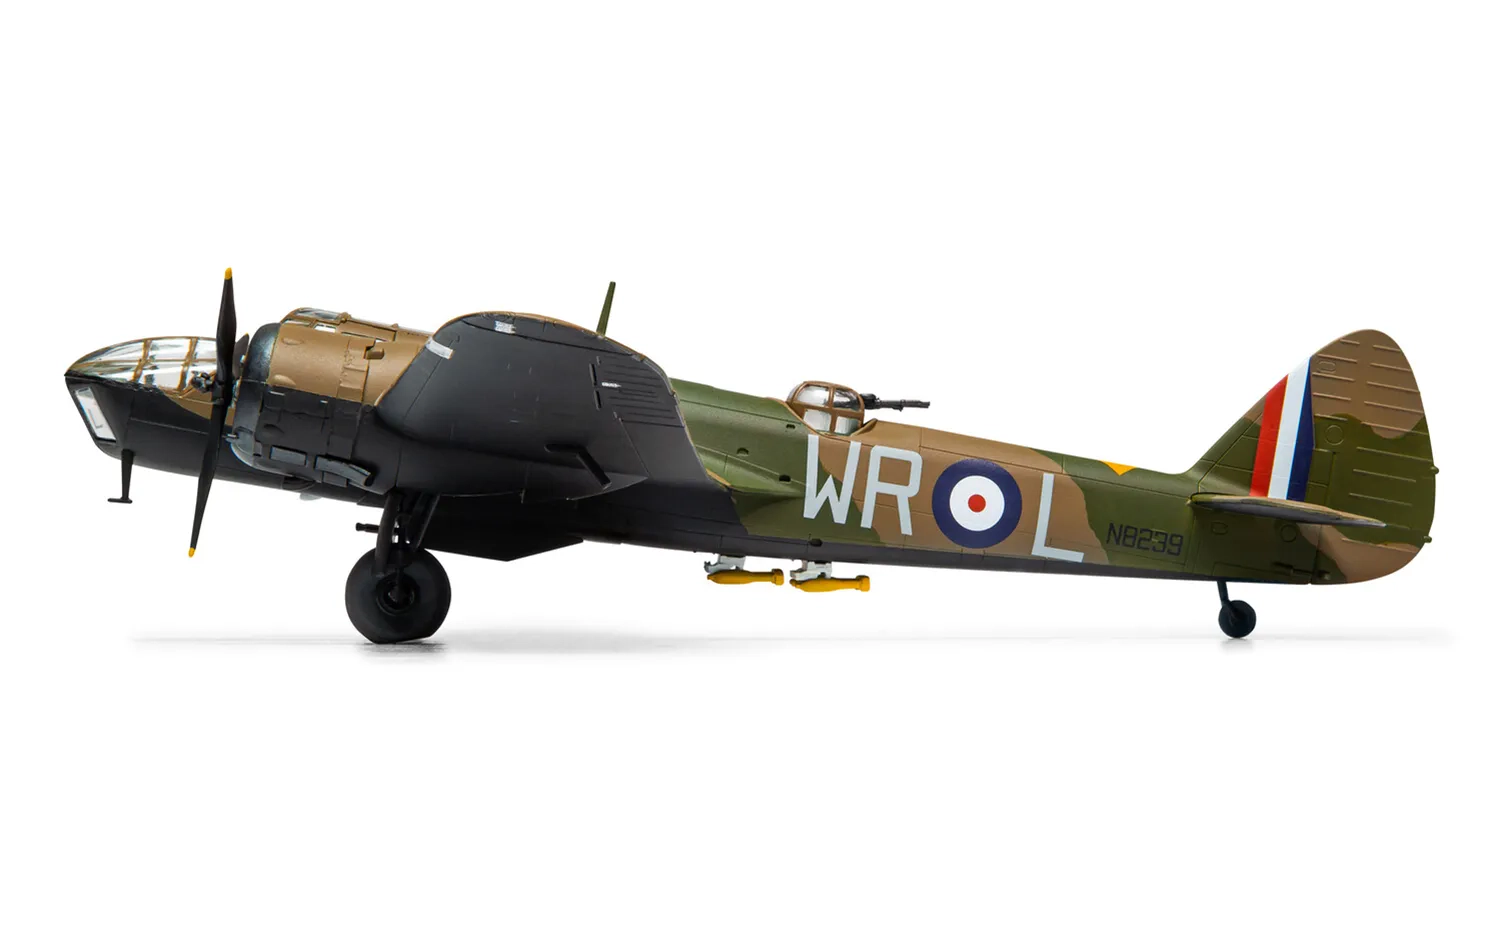 Bristol Blenheim Mk.IVF Fighter